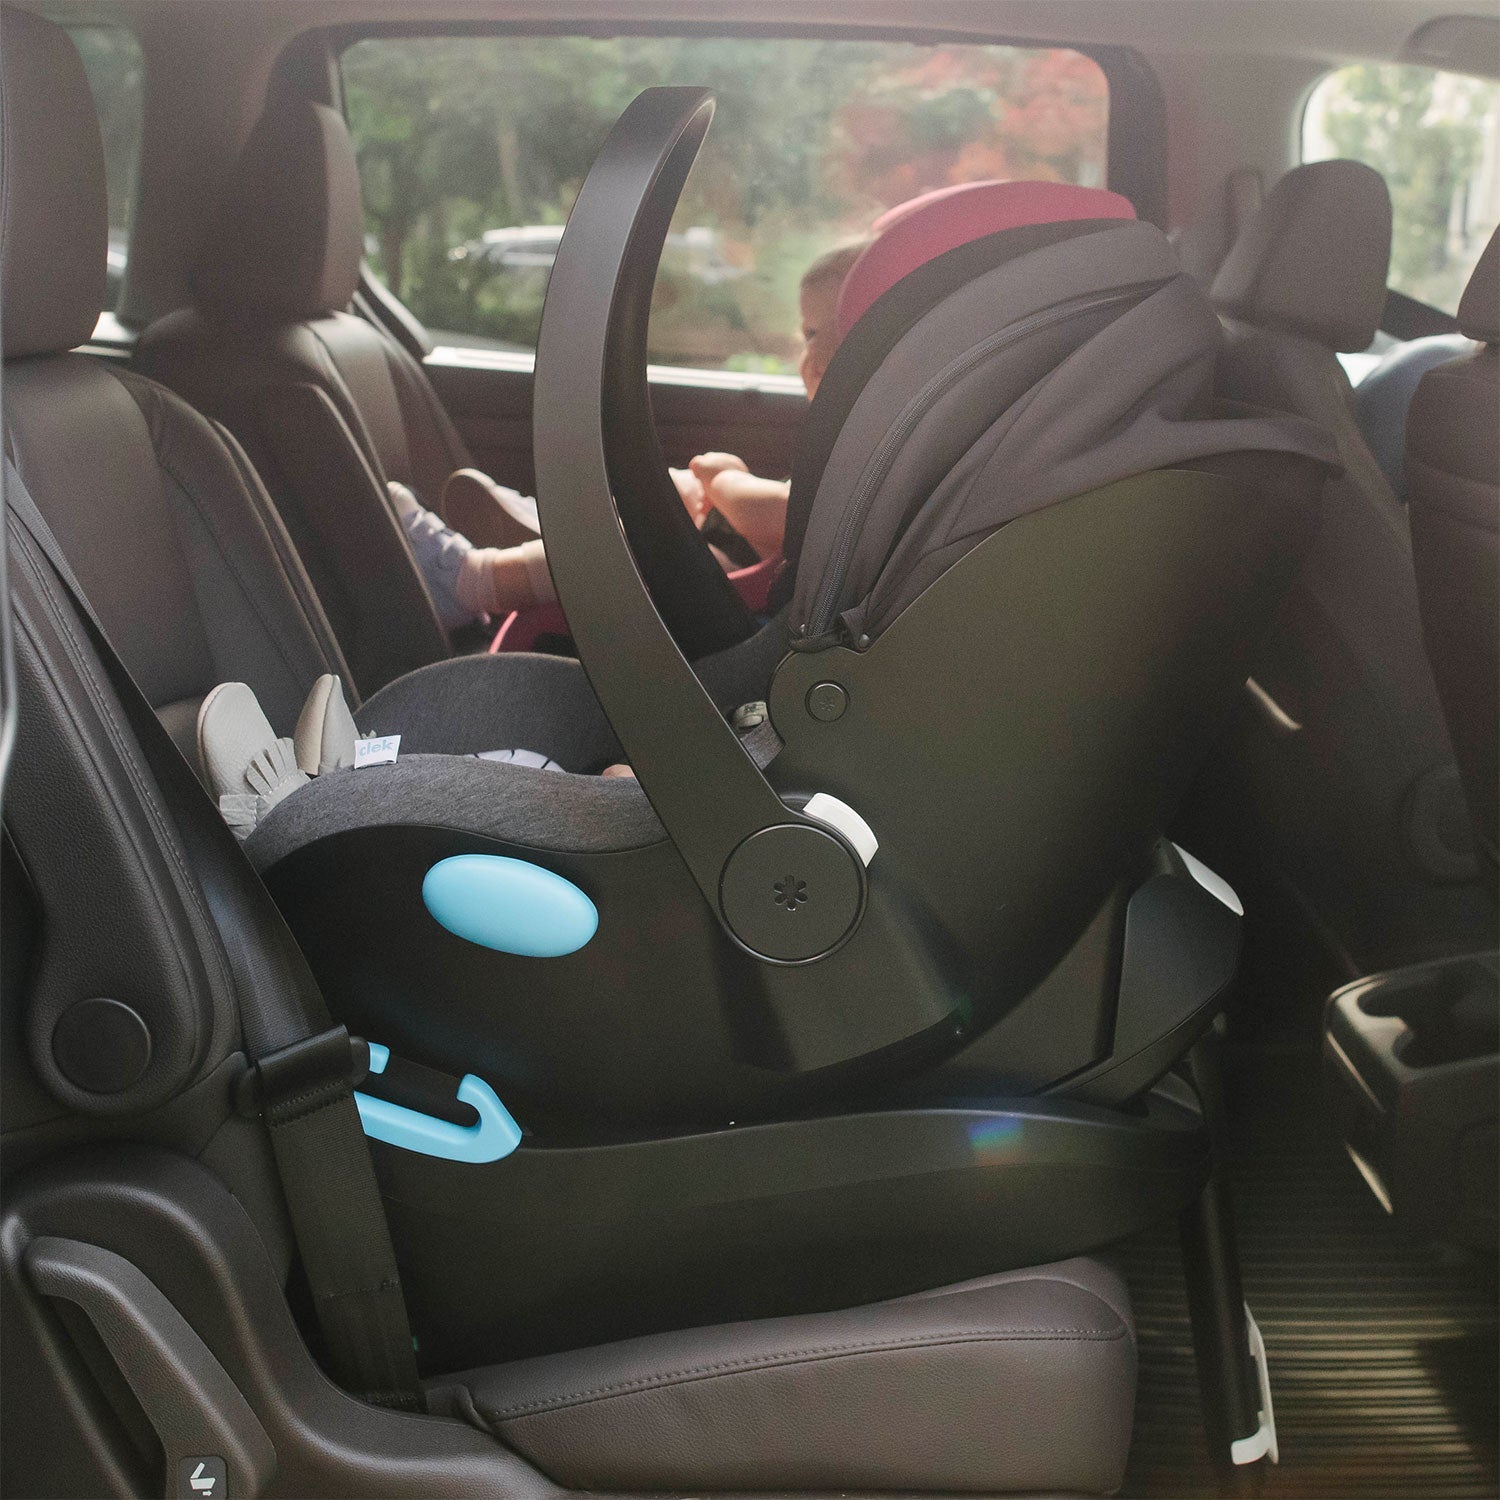 Clek Liing Extra Infant Car Seat Base